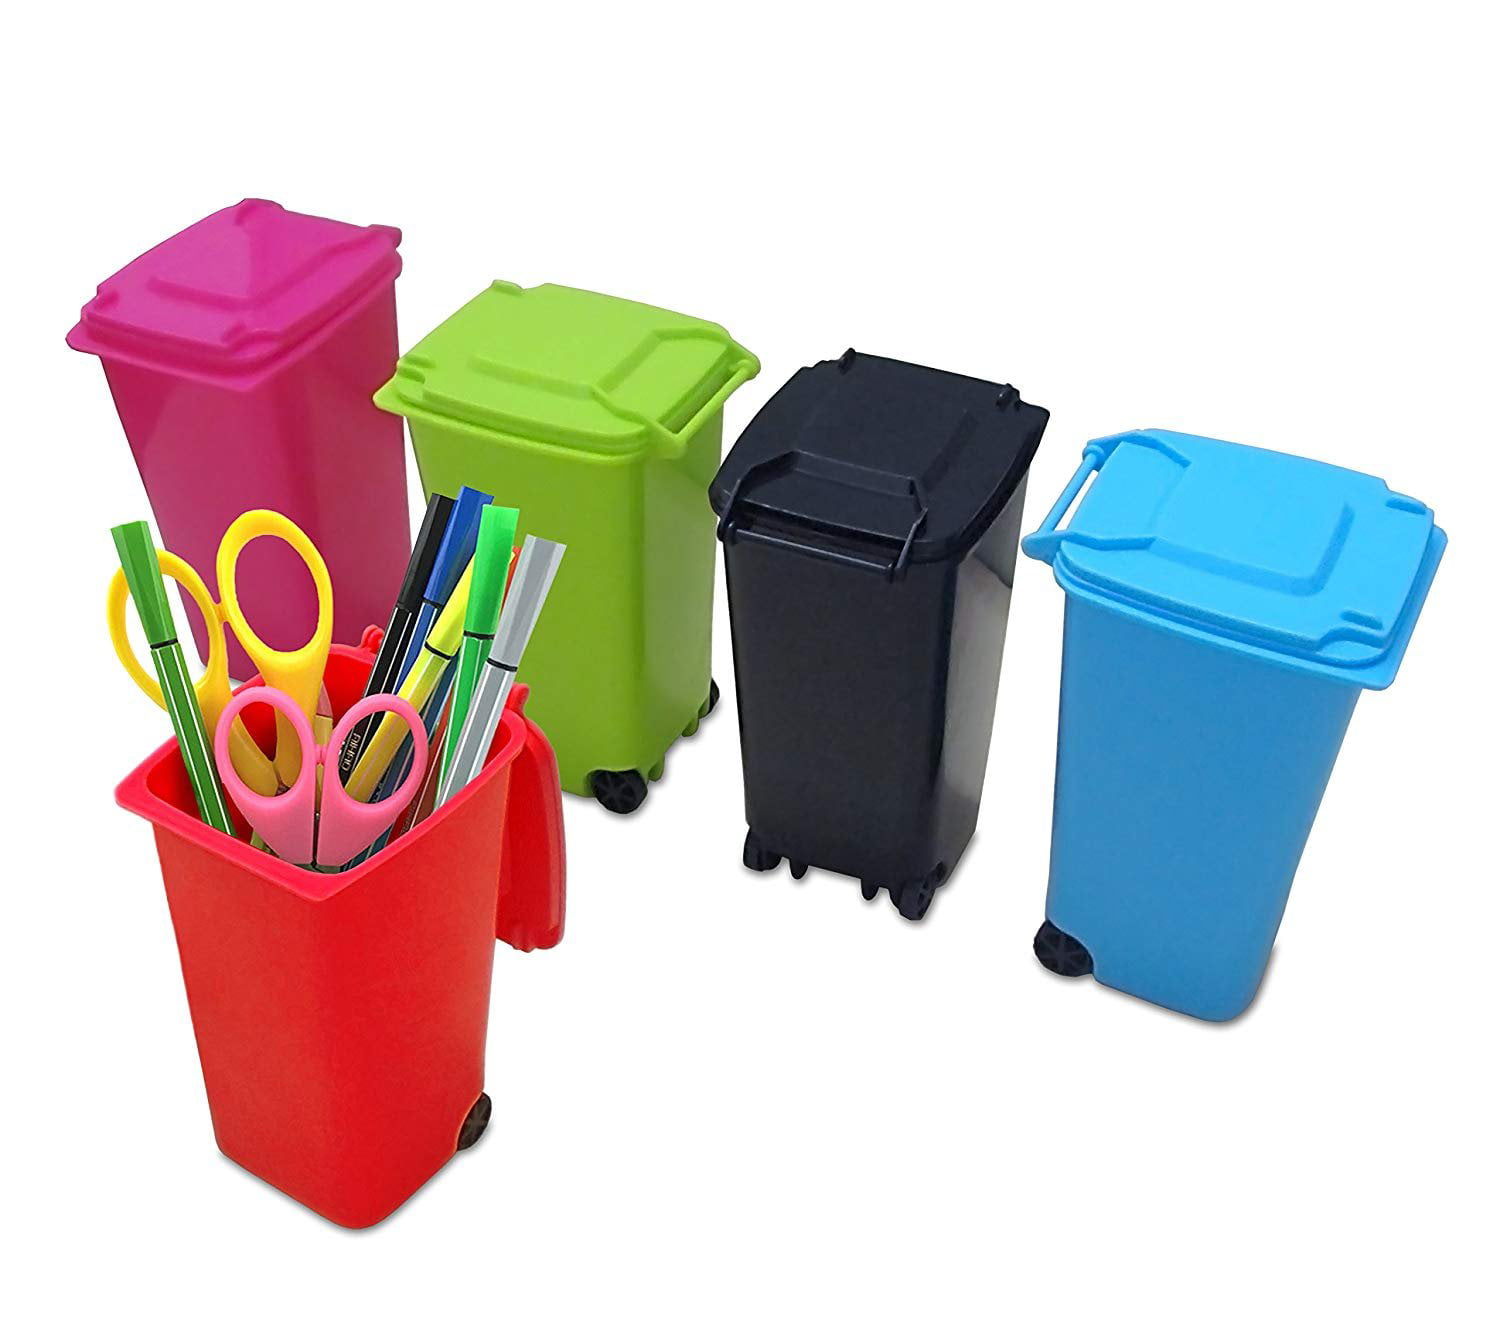 Xuxuou Desktop Organizer Pen Holder Plastic Mini Recycling Bins Trash Can Pot Desk Storage Organizer Container for Home Decoration 